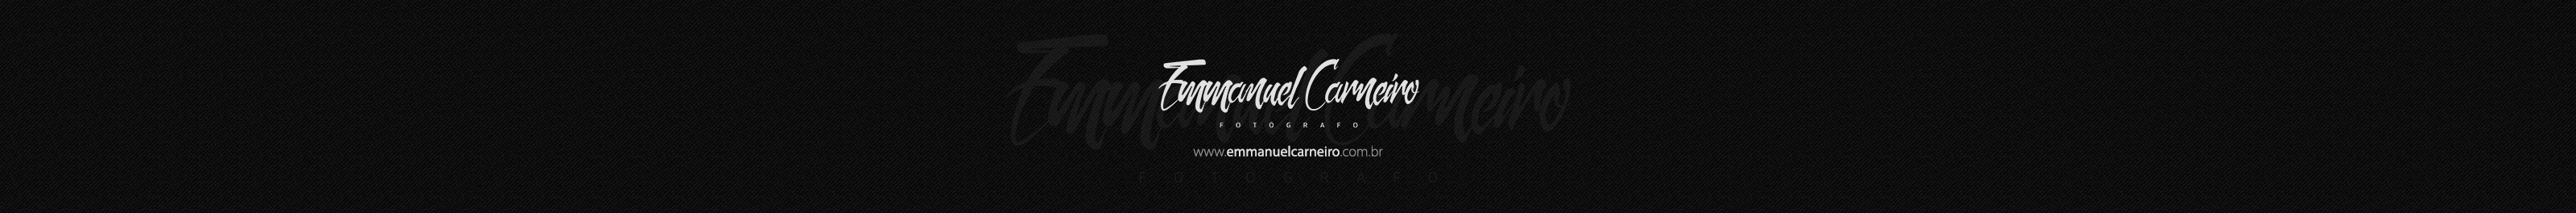 Emmanuel Carneiro's profile banner